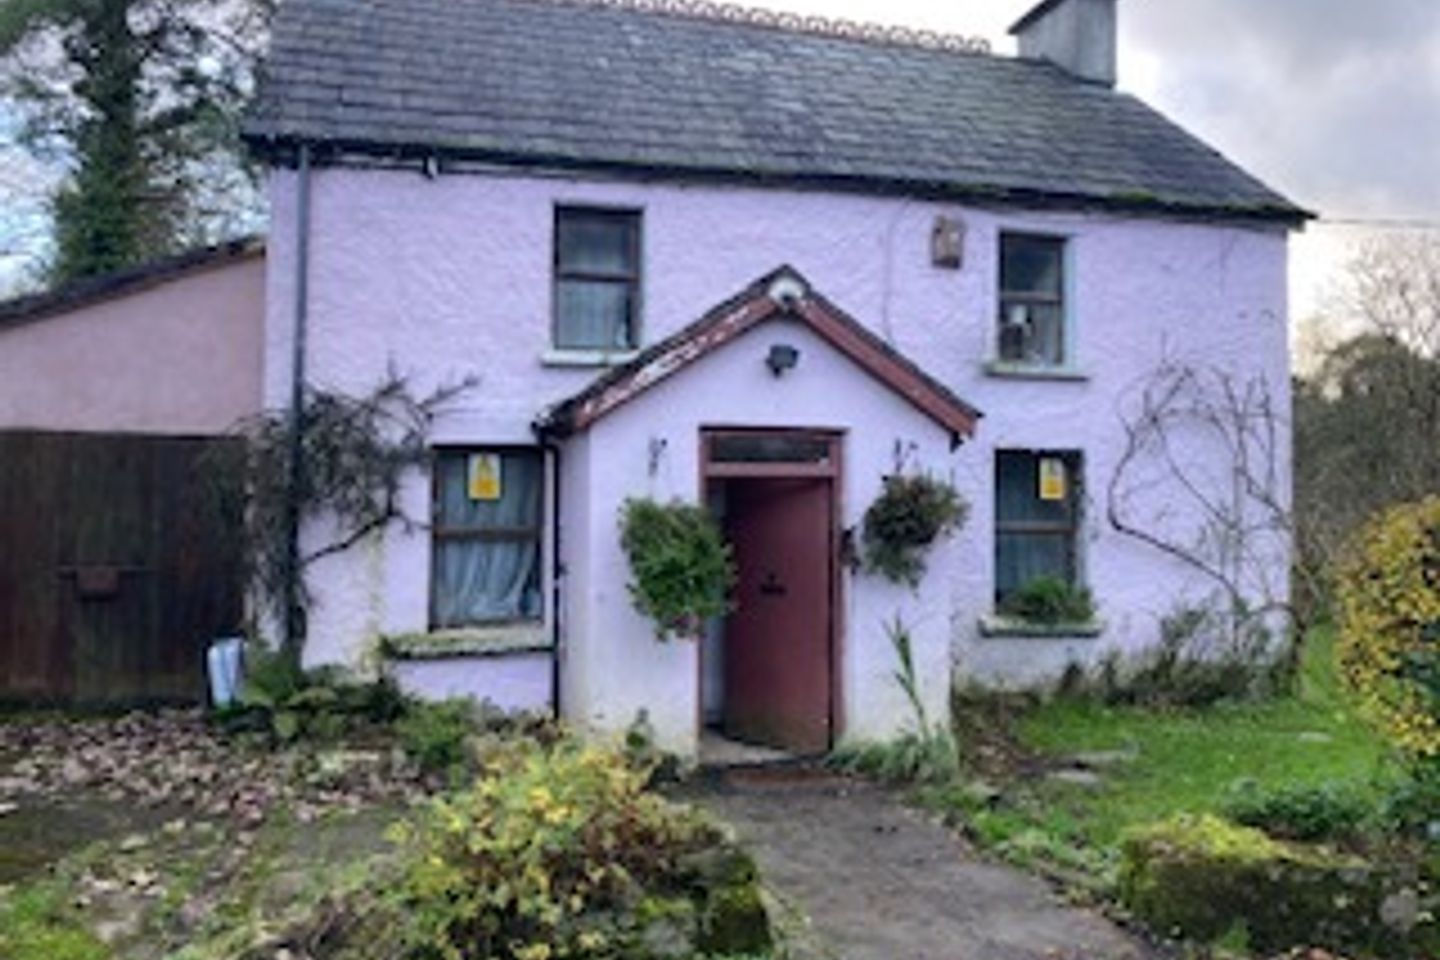 Foildarrig Cottage, Foildarrig, Cappagh White, Co. Tipperary, E34NX57